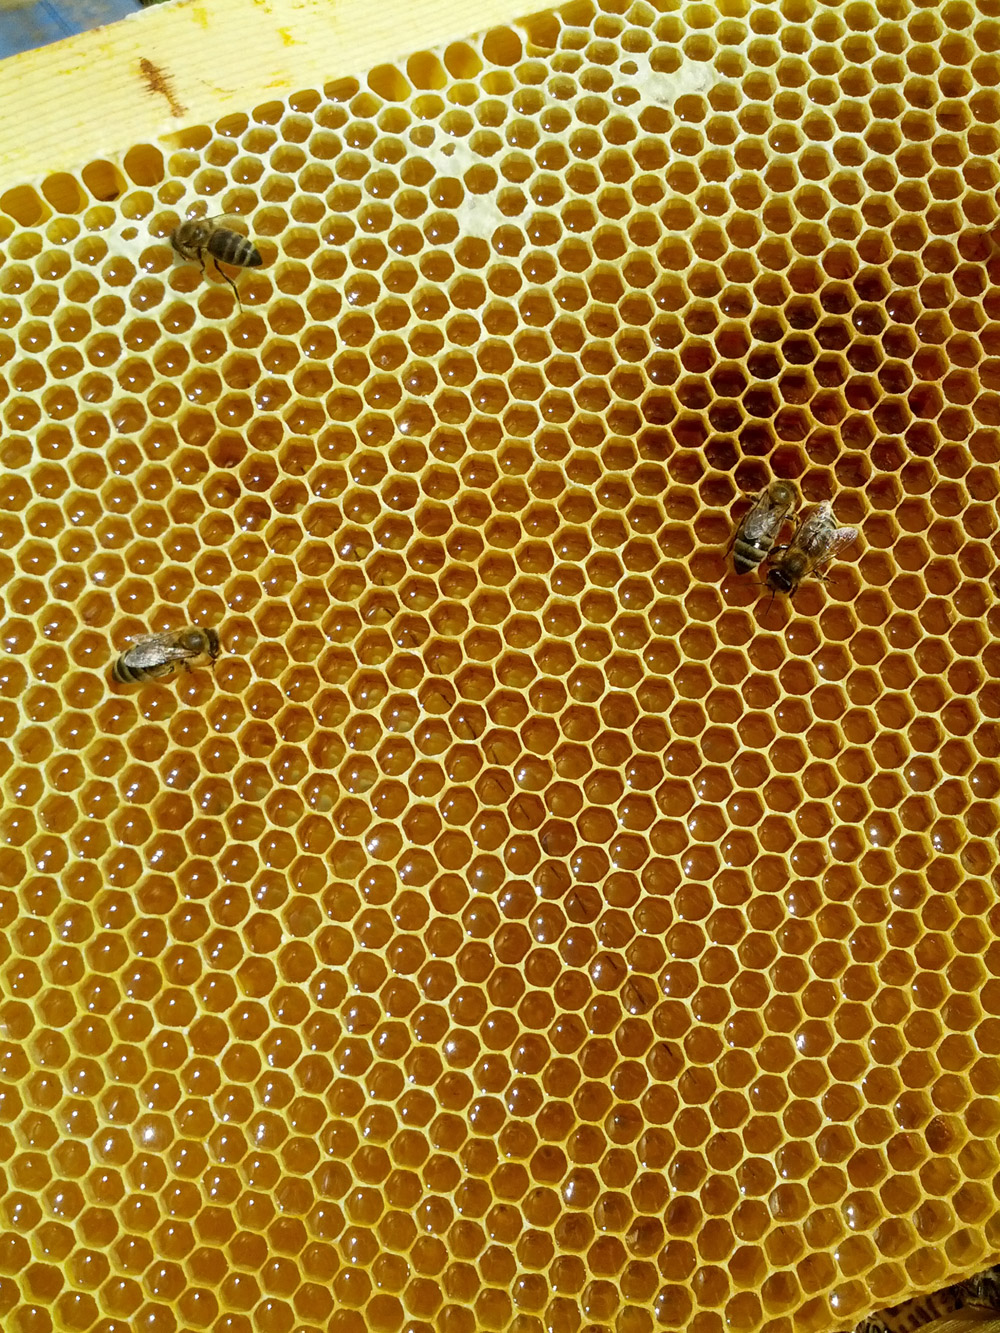 1.5kg Multiflower Pure Raw Organic Honey Unfiltered Unheated Crystallized Honey